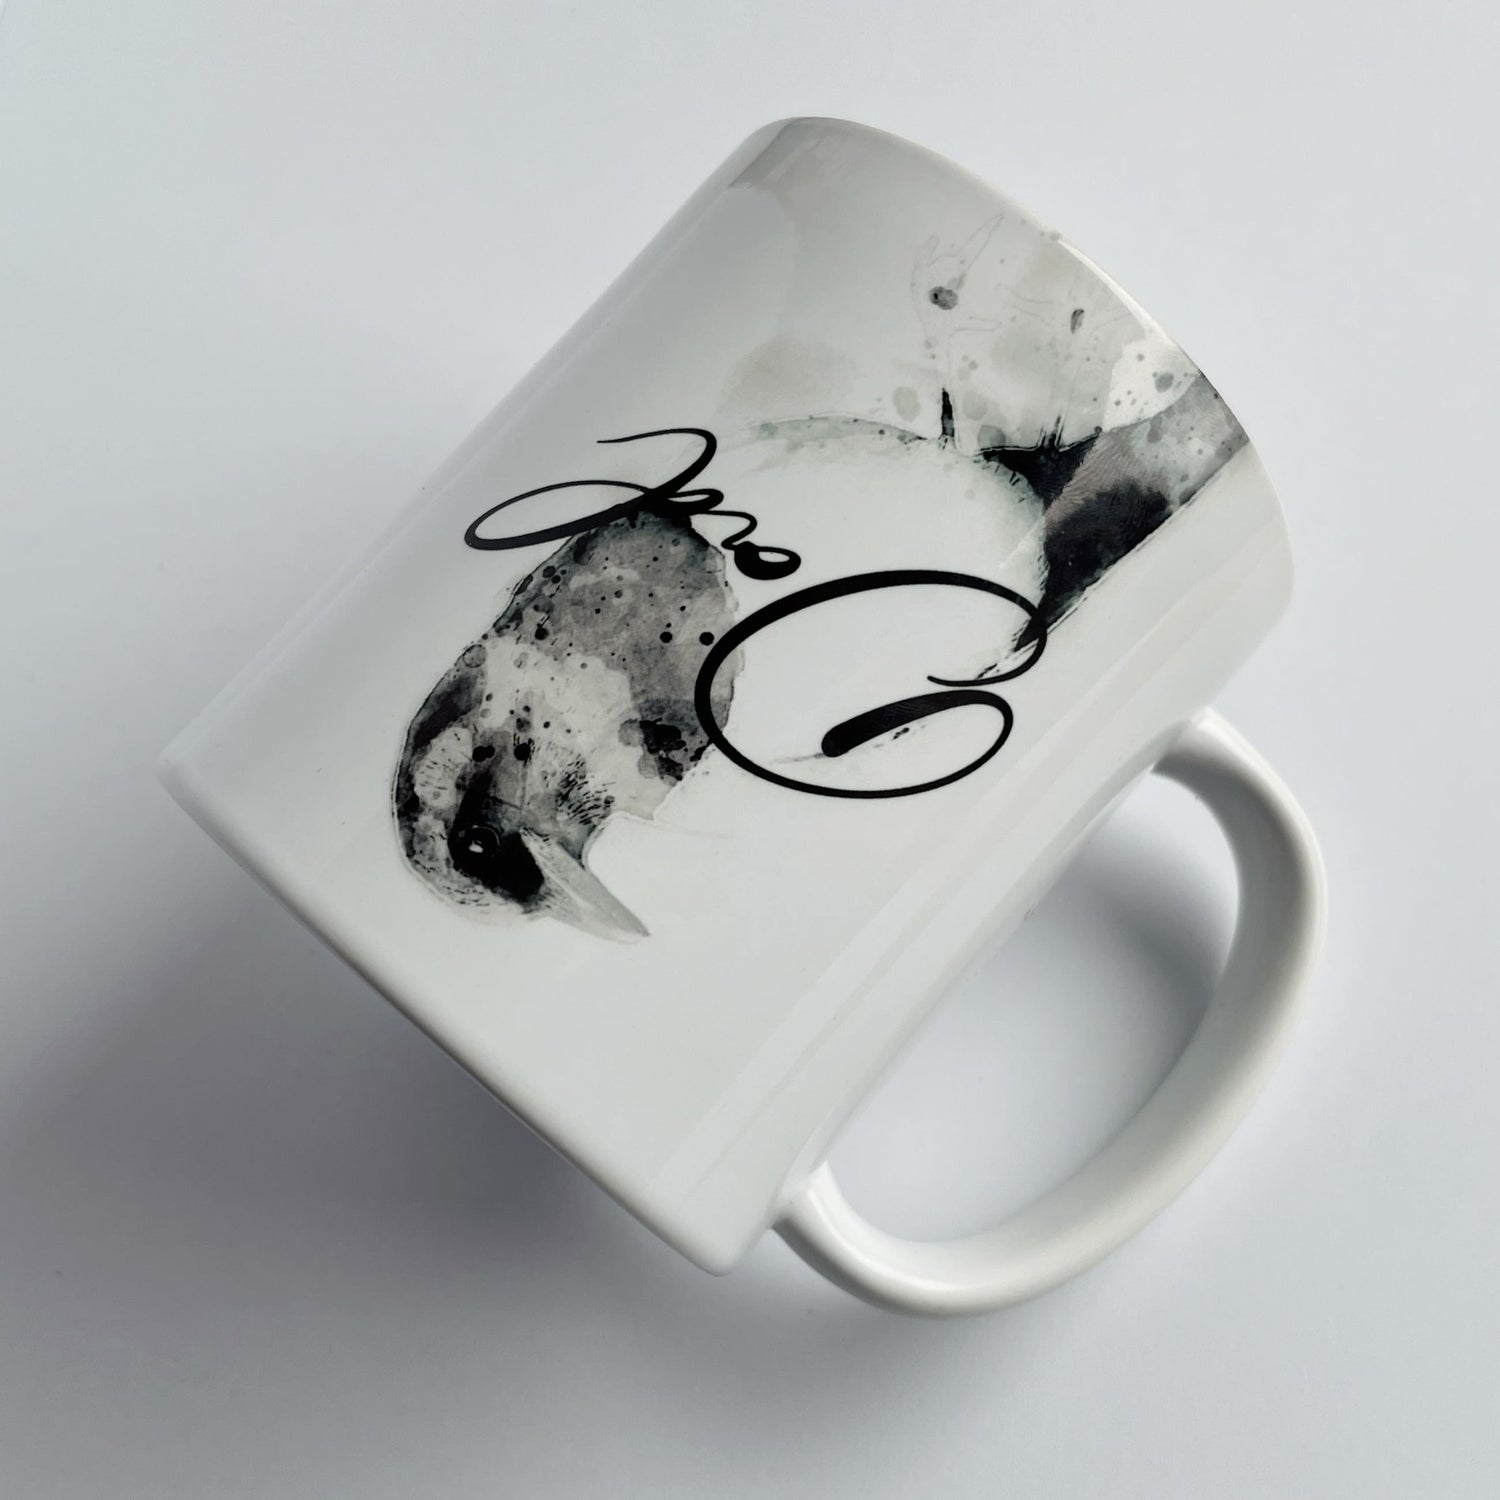 Personalised Magpie Art Mug Gift  Mug